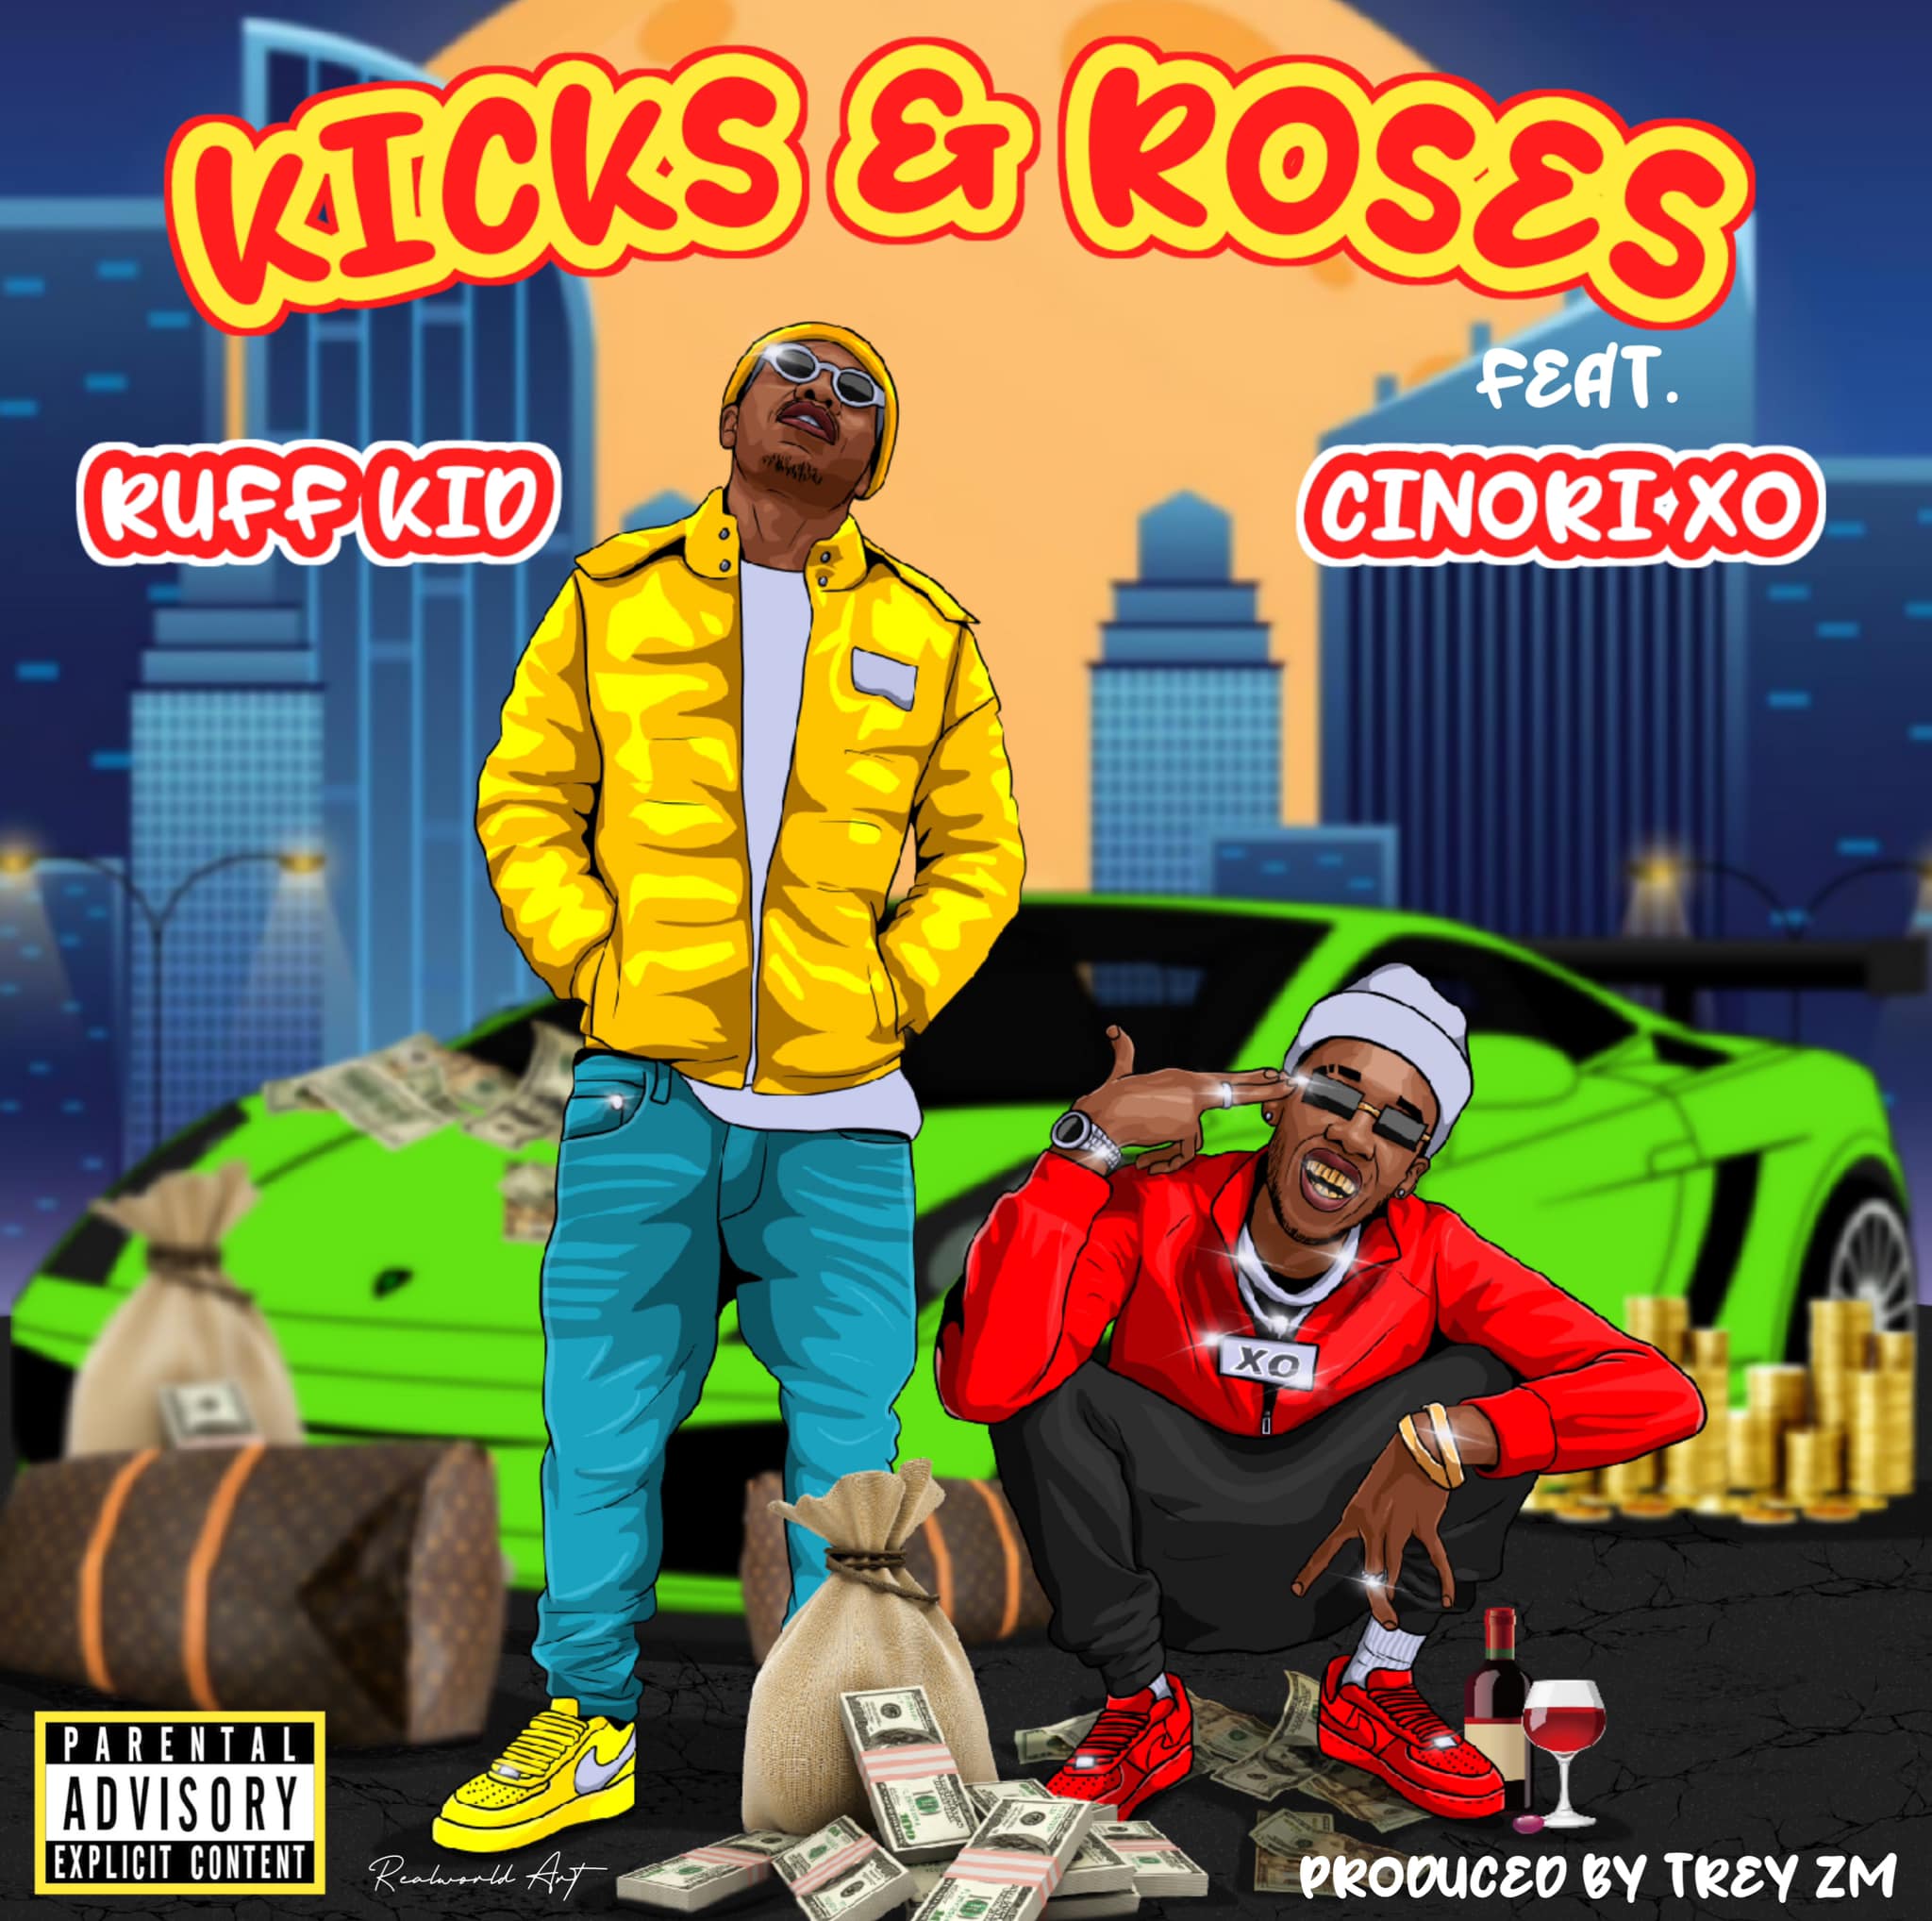 Ruff Kid Ft Cinori Xo Kicks Roses Mp3 Download